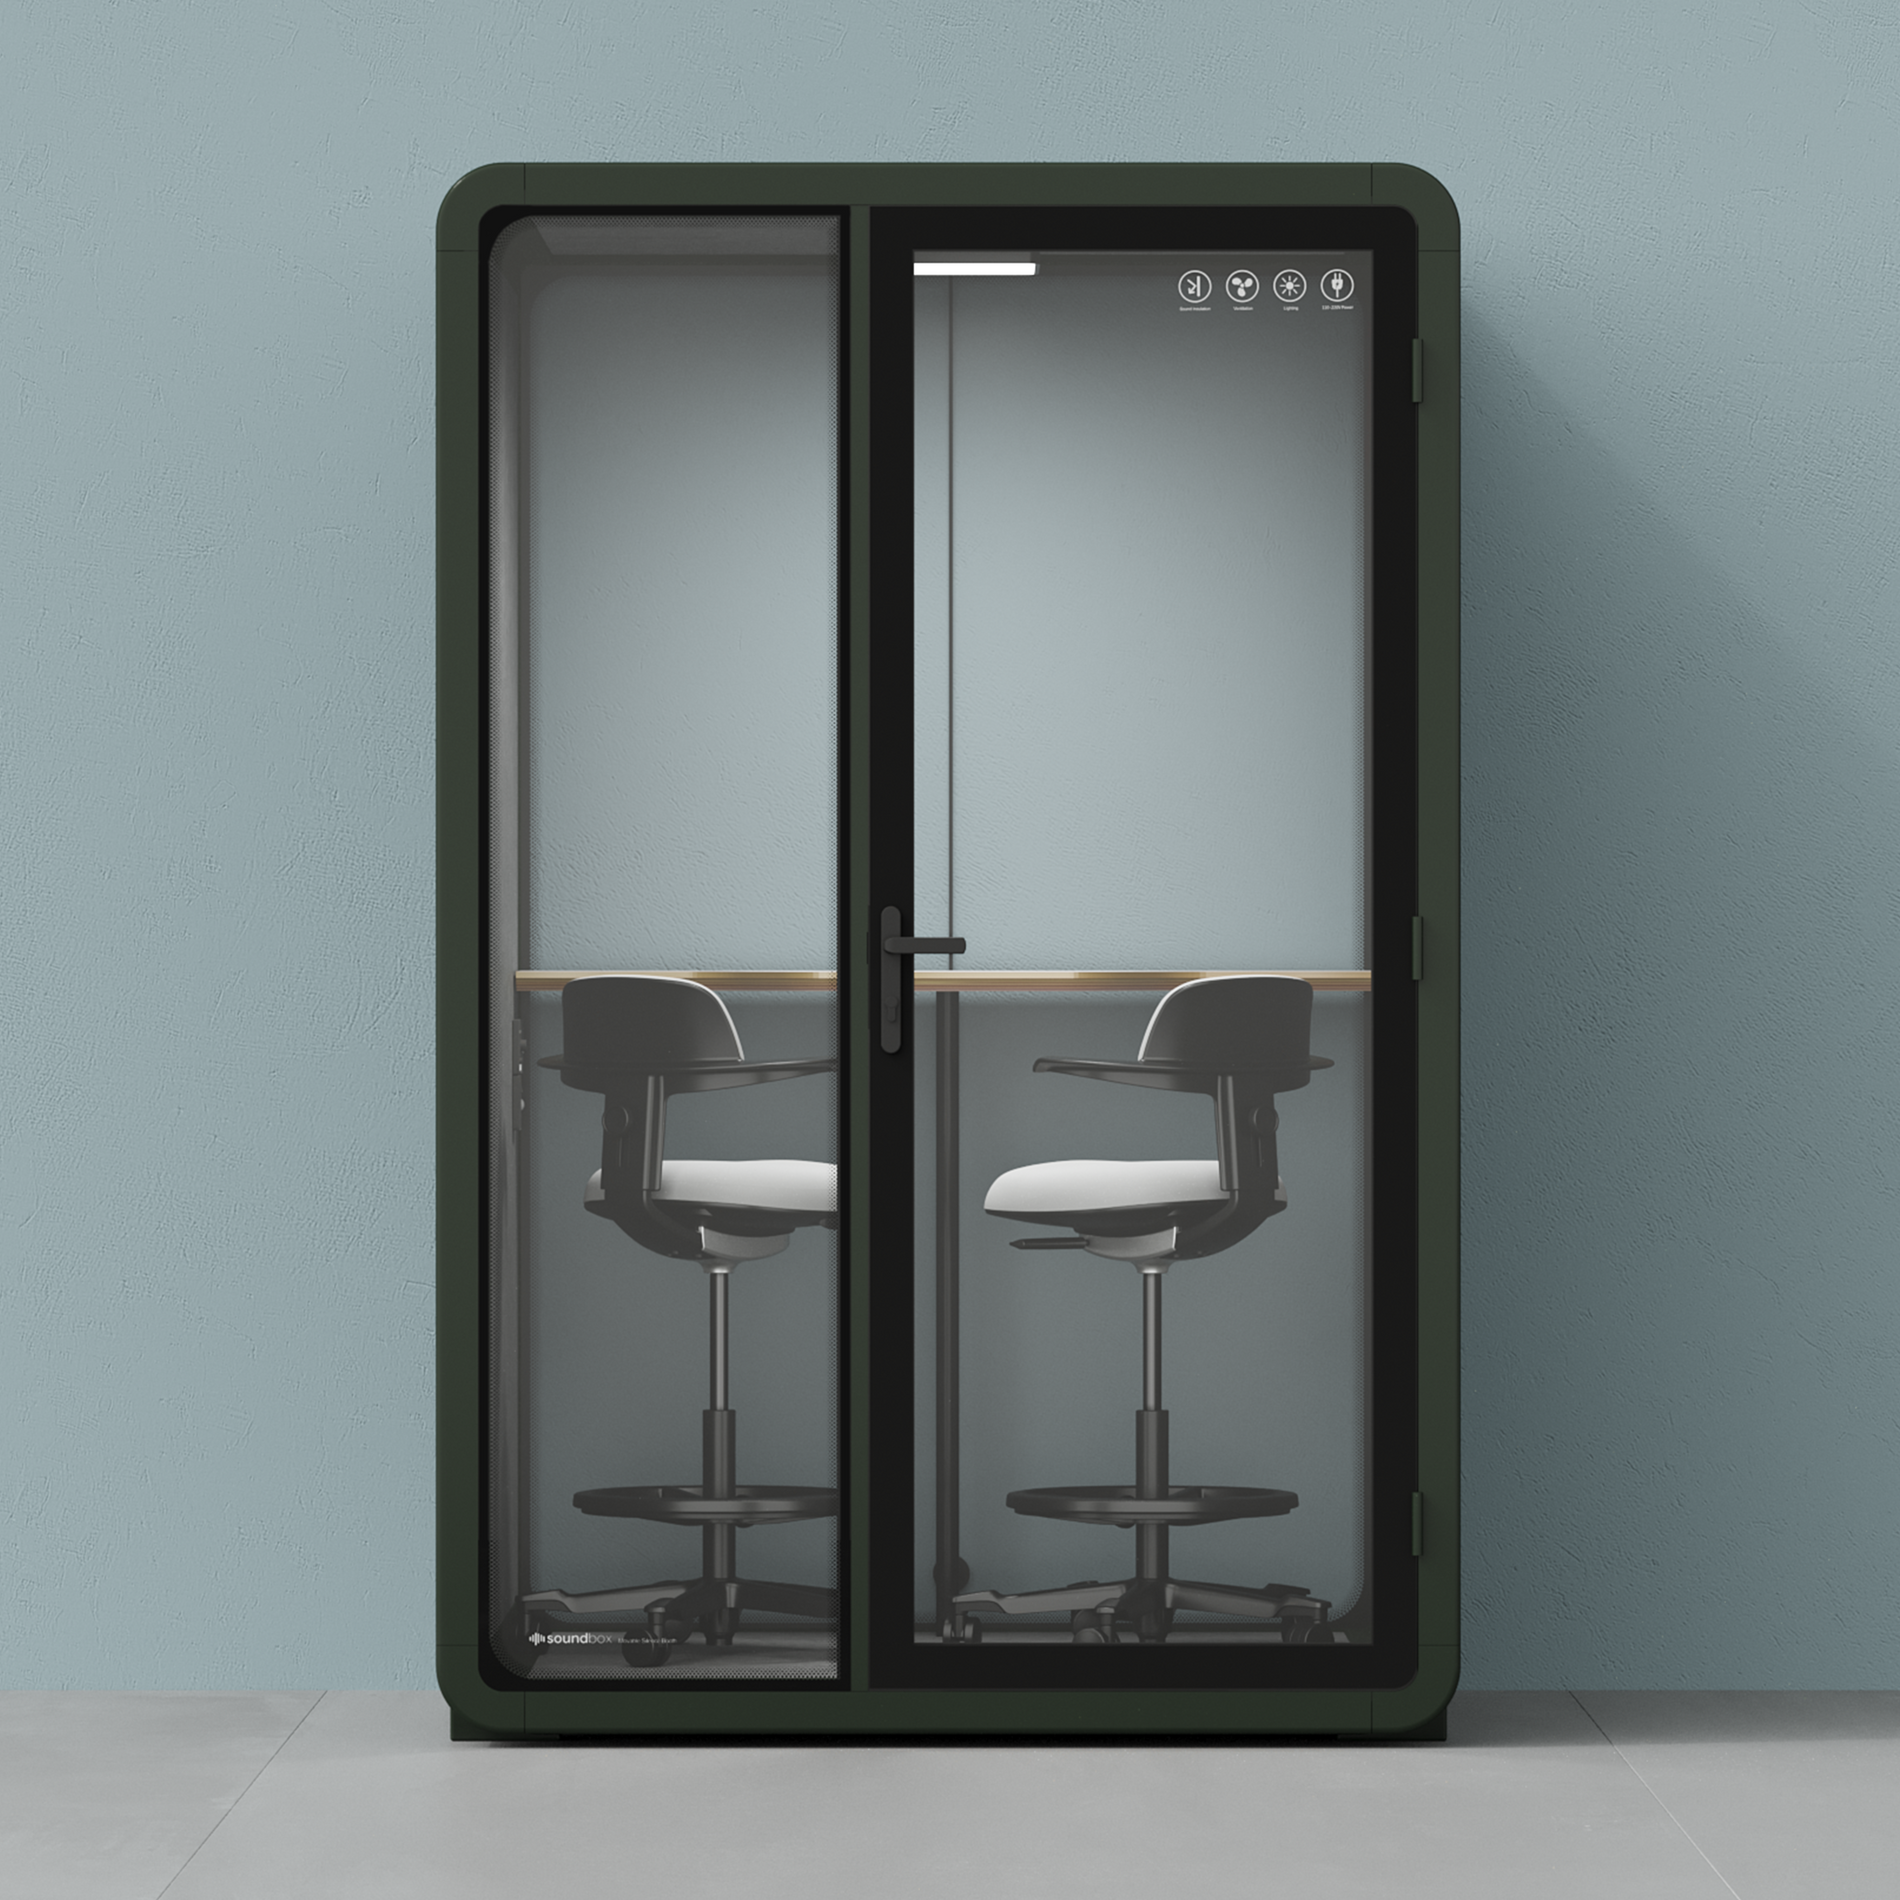 Quell - CoWorker - 2-personers poddDark Green / Dark Gray / Dual Zoom Room + Device Shelf + 2 Barstools